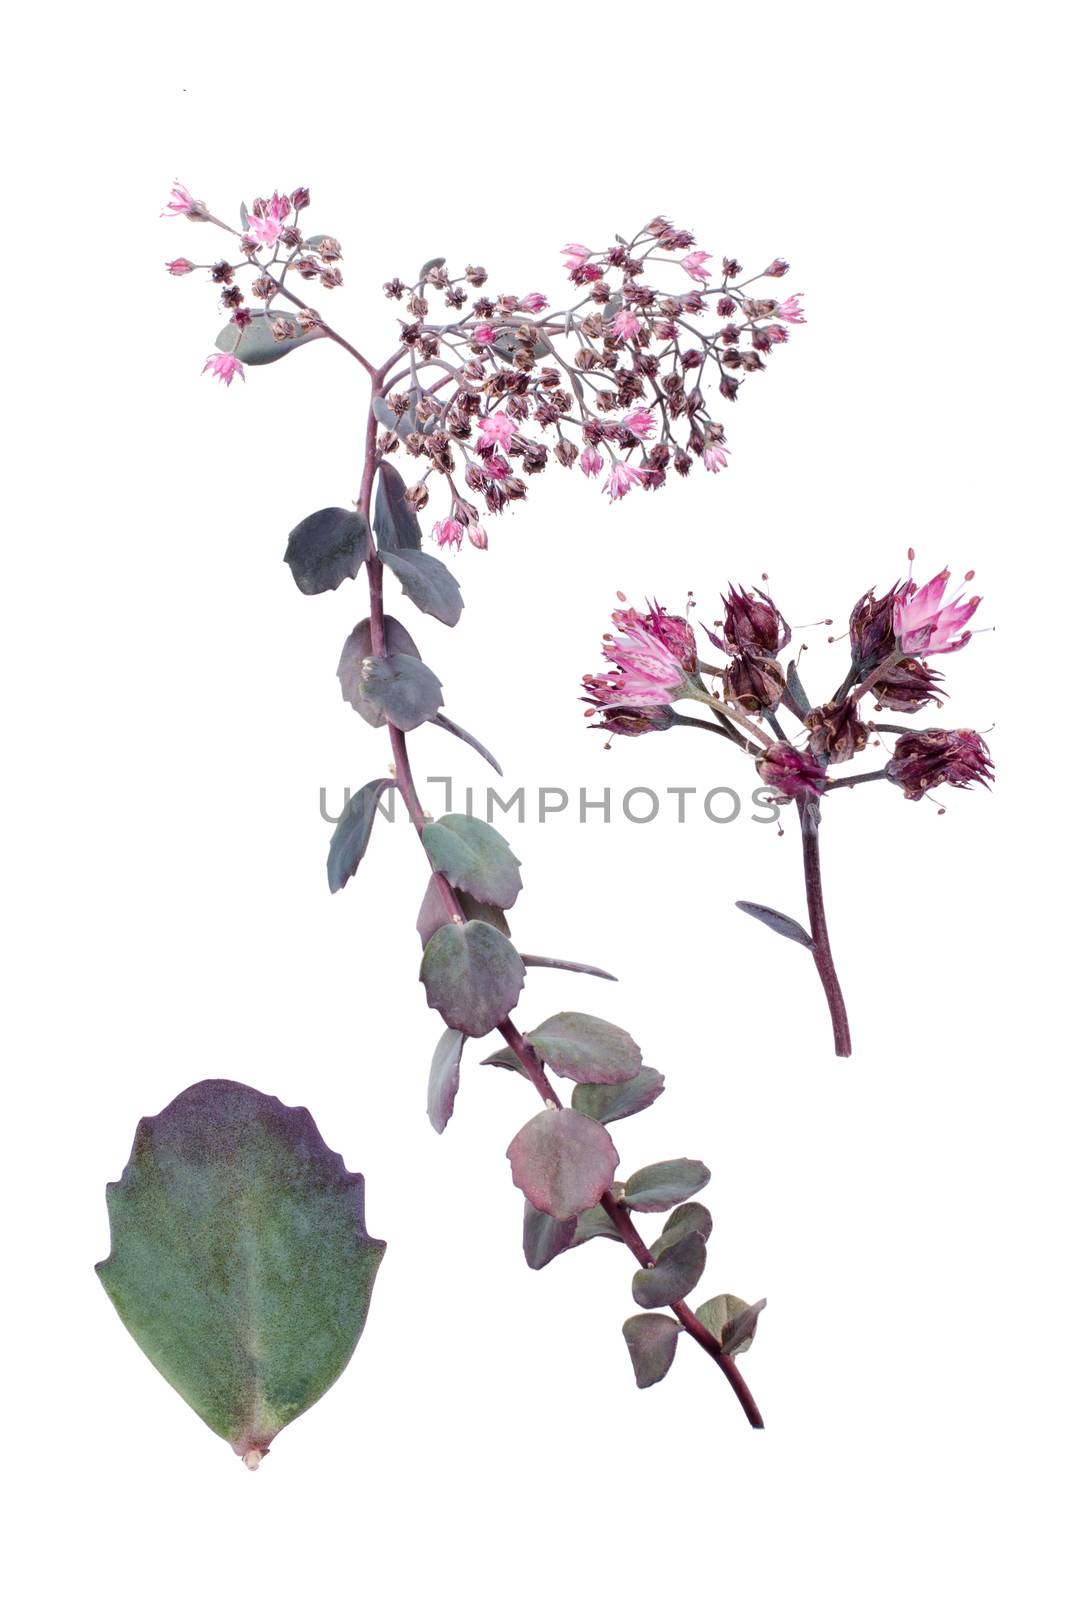 Sedum cauticola with details of leaf and bloom against white background.